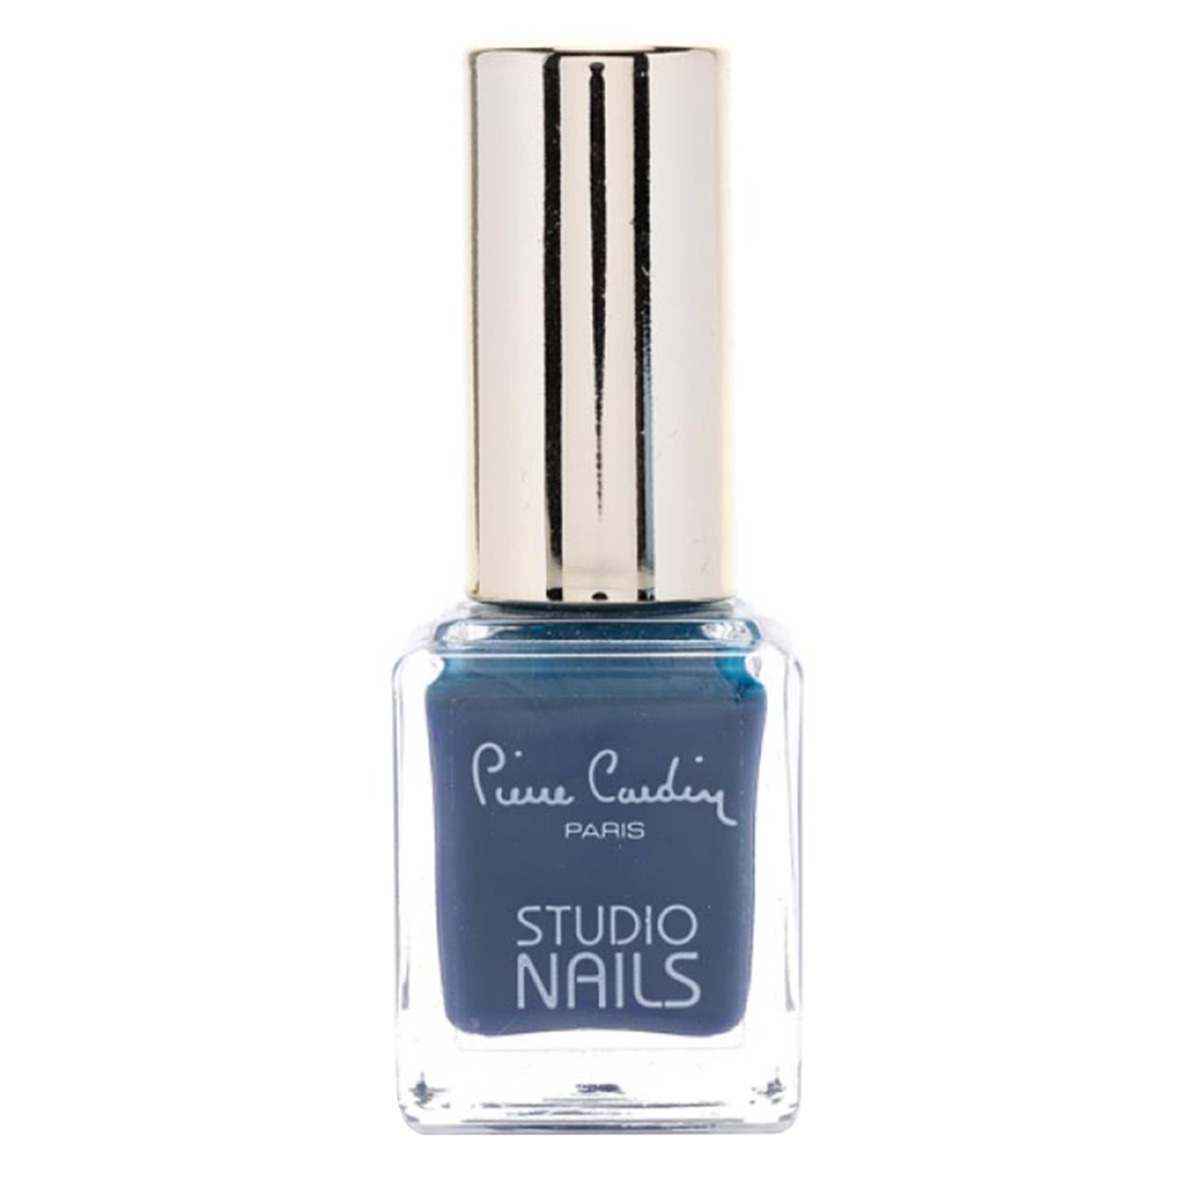 Pierre Cardin Paris - Studio Nails, 11.5ml-75 - Dirty Medium Blue